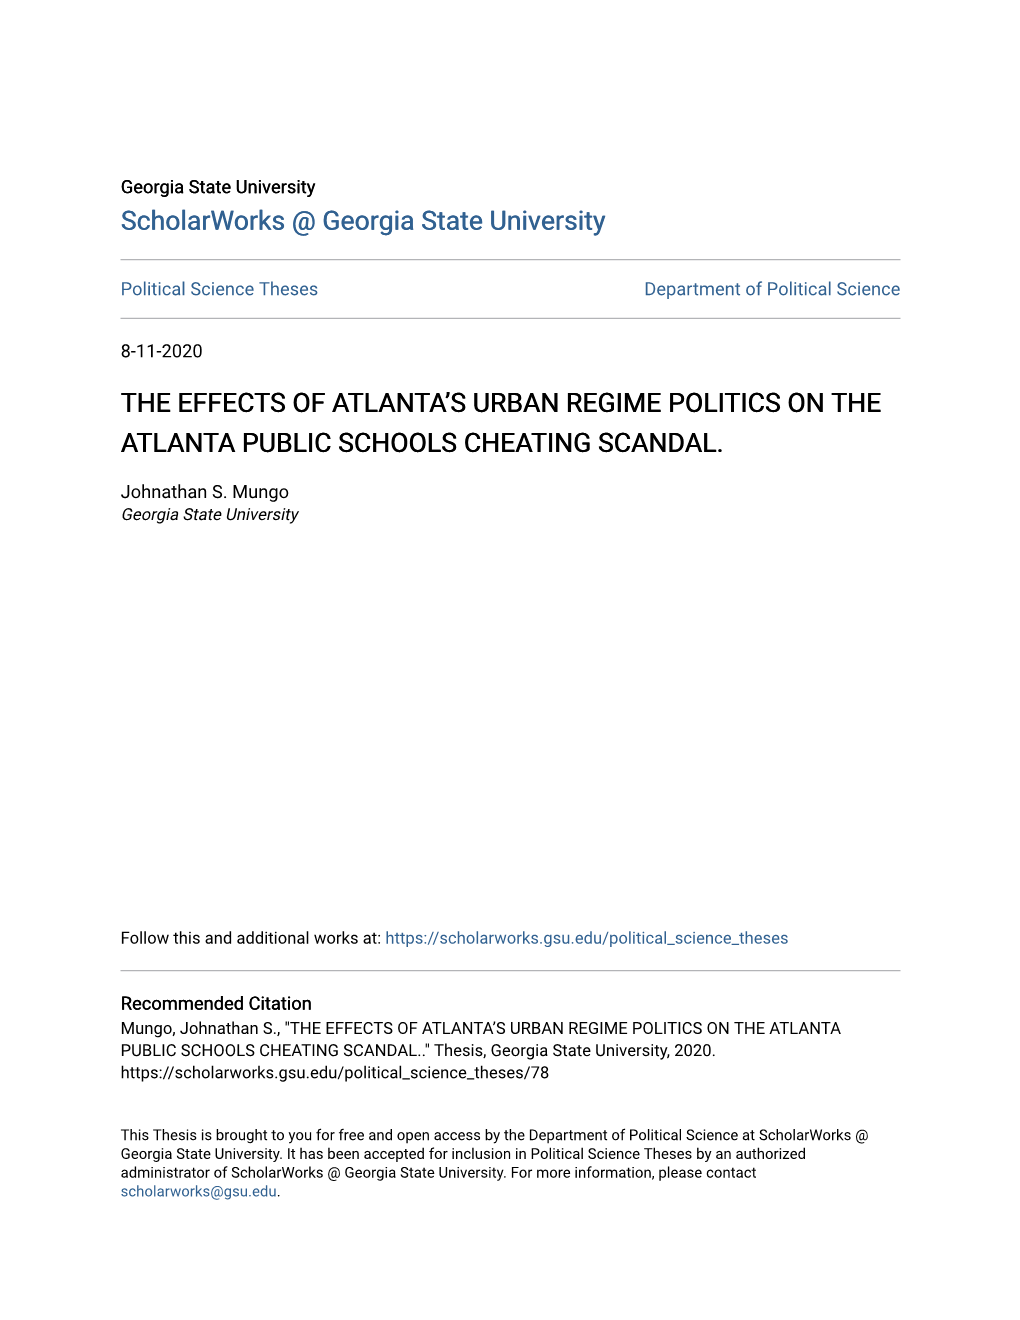 The Effects of Atlanta's Urban Regime Politics On